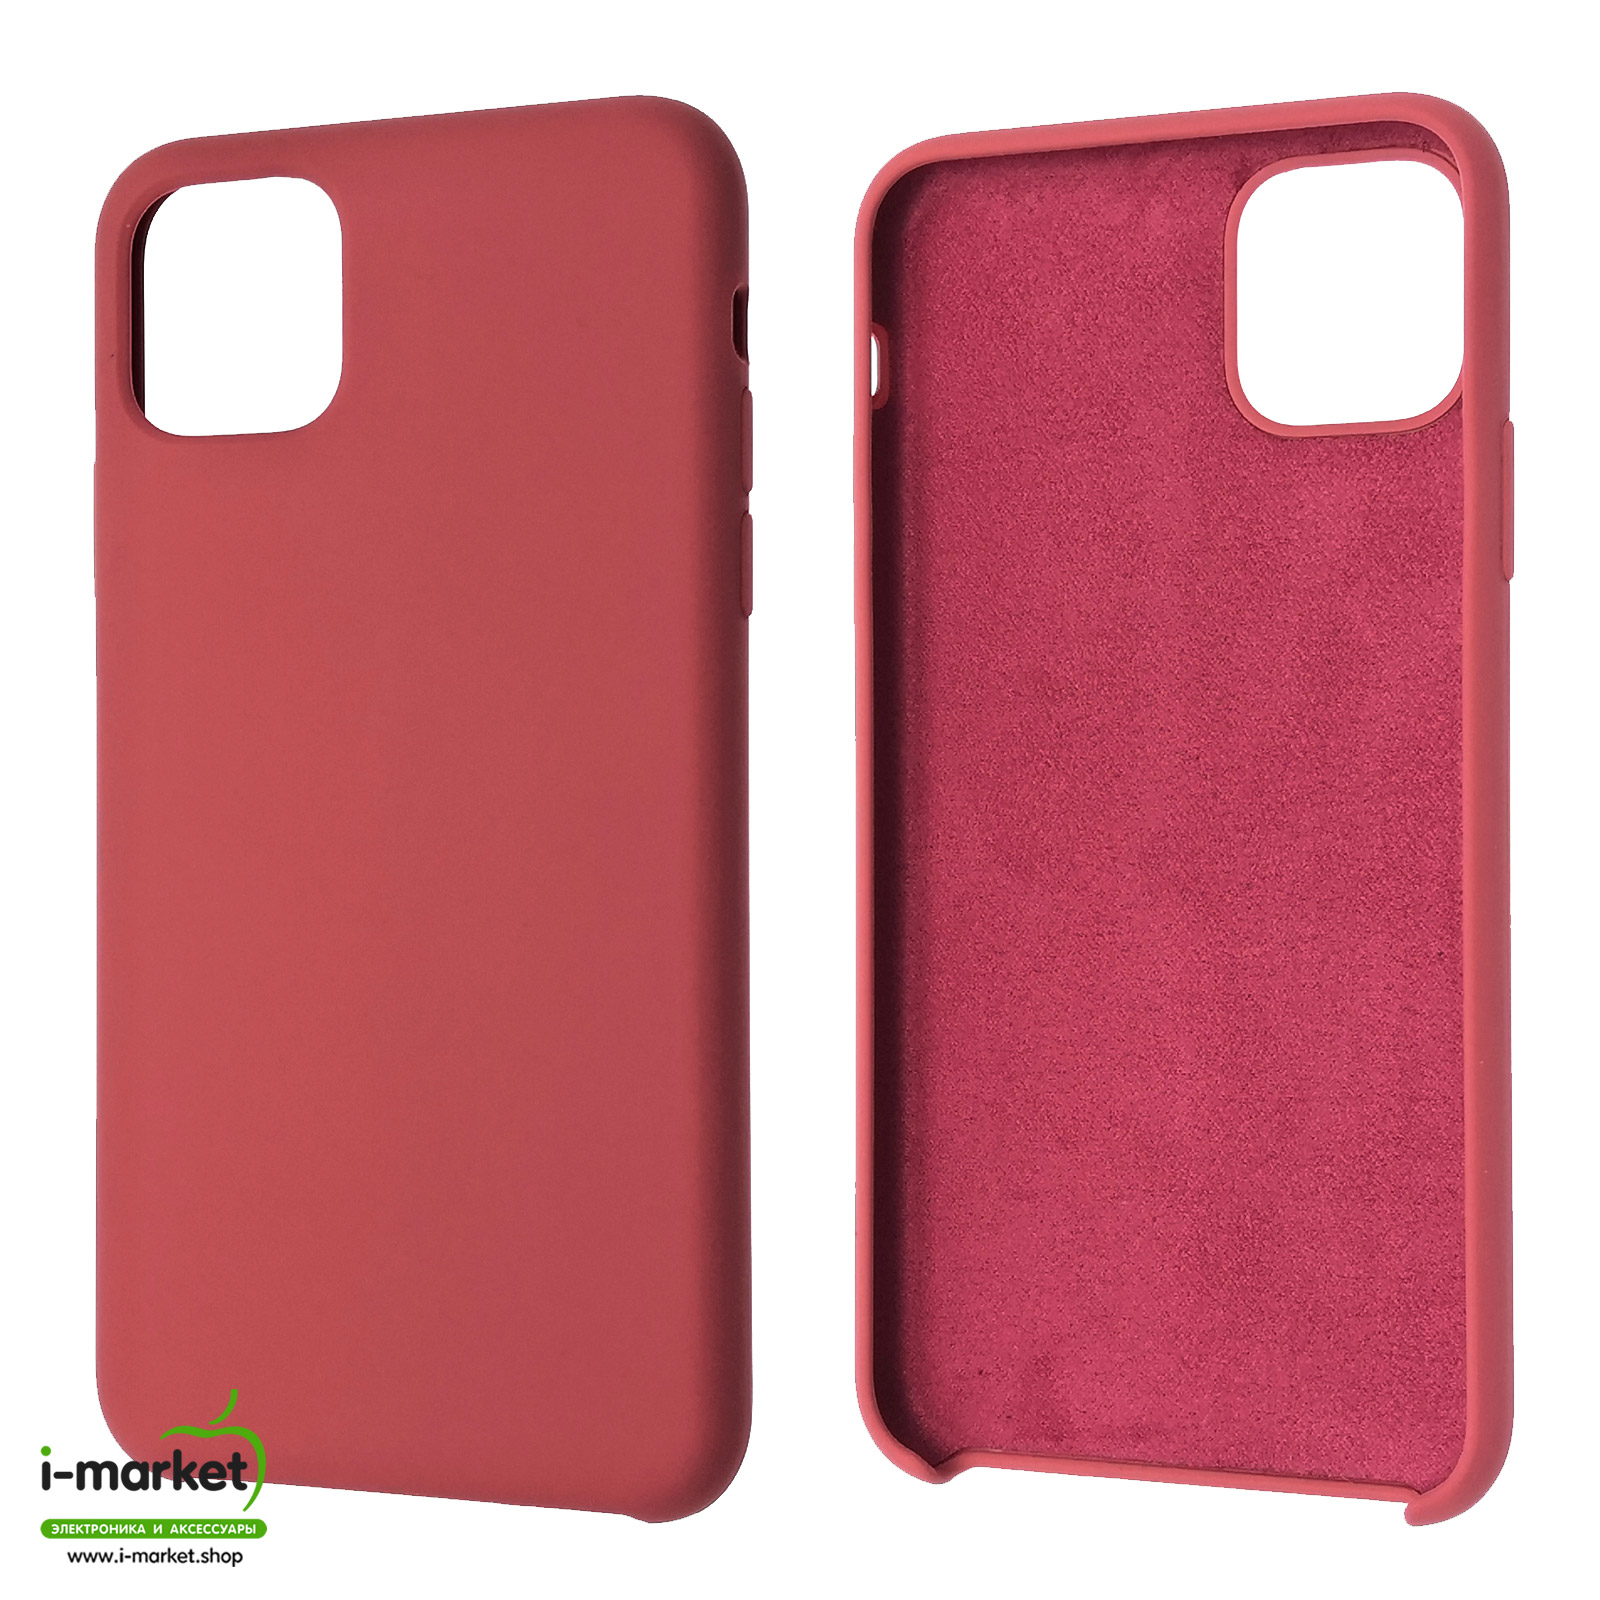 Чехол накладка Silicon Case для APPLE iPhone 11 Pro MAX, силикон, бархат, цвет светло бордовый